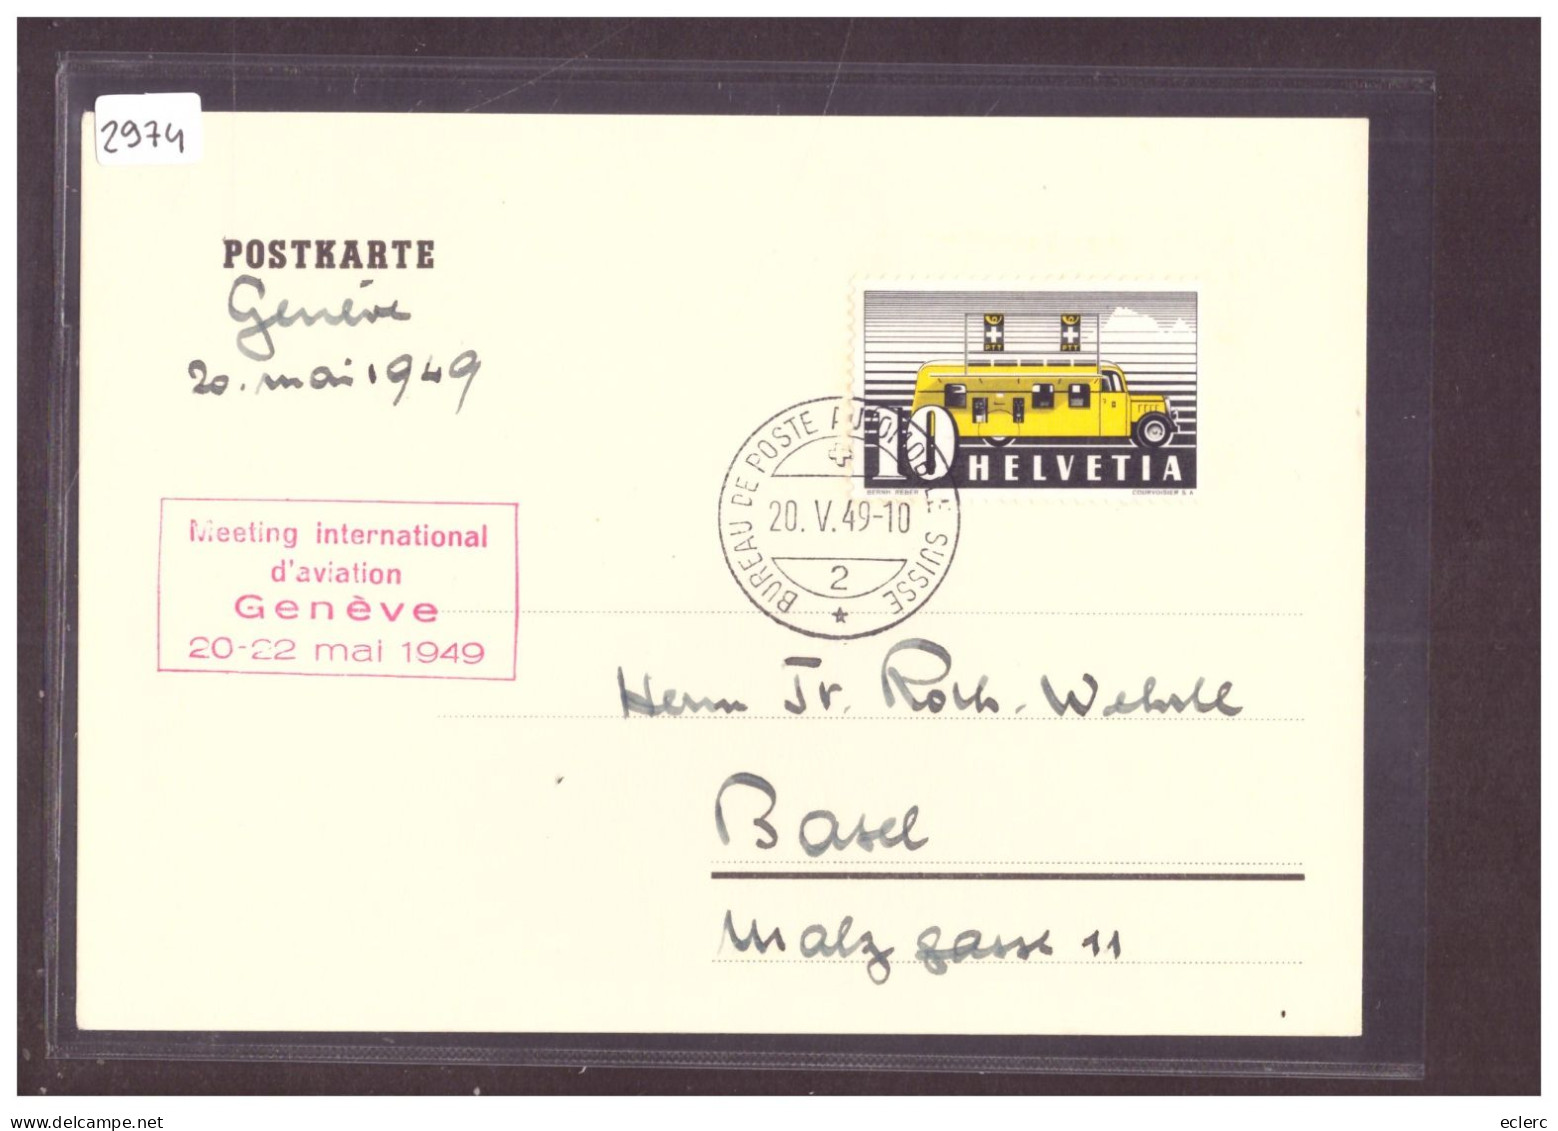 CARTE POSTALE - GENEVE - MEETING D'AVIATION 1949 - SCHWEIZ. AUTOMOBIL POSTBUREAU - TB - Postmark Collection